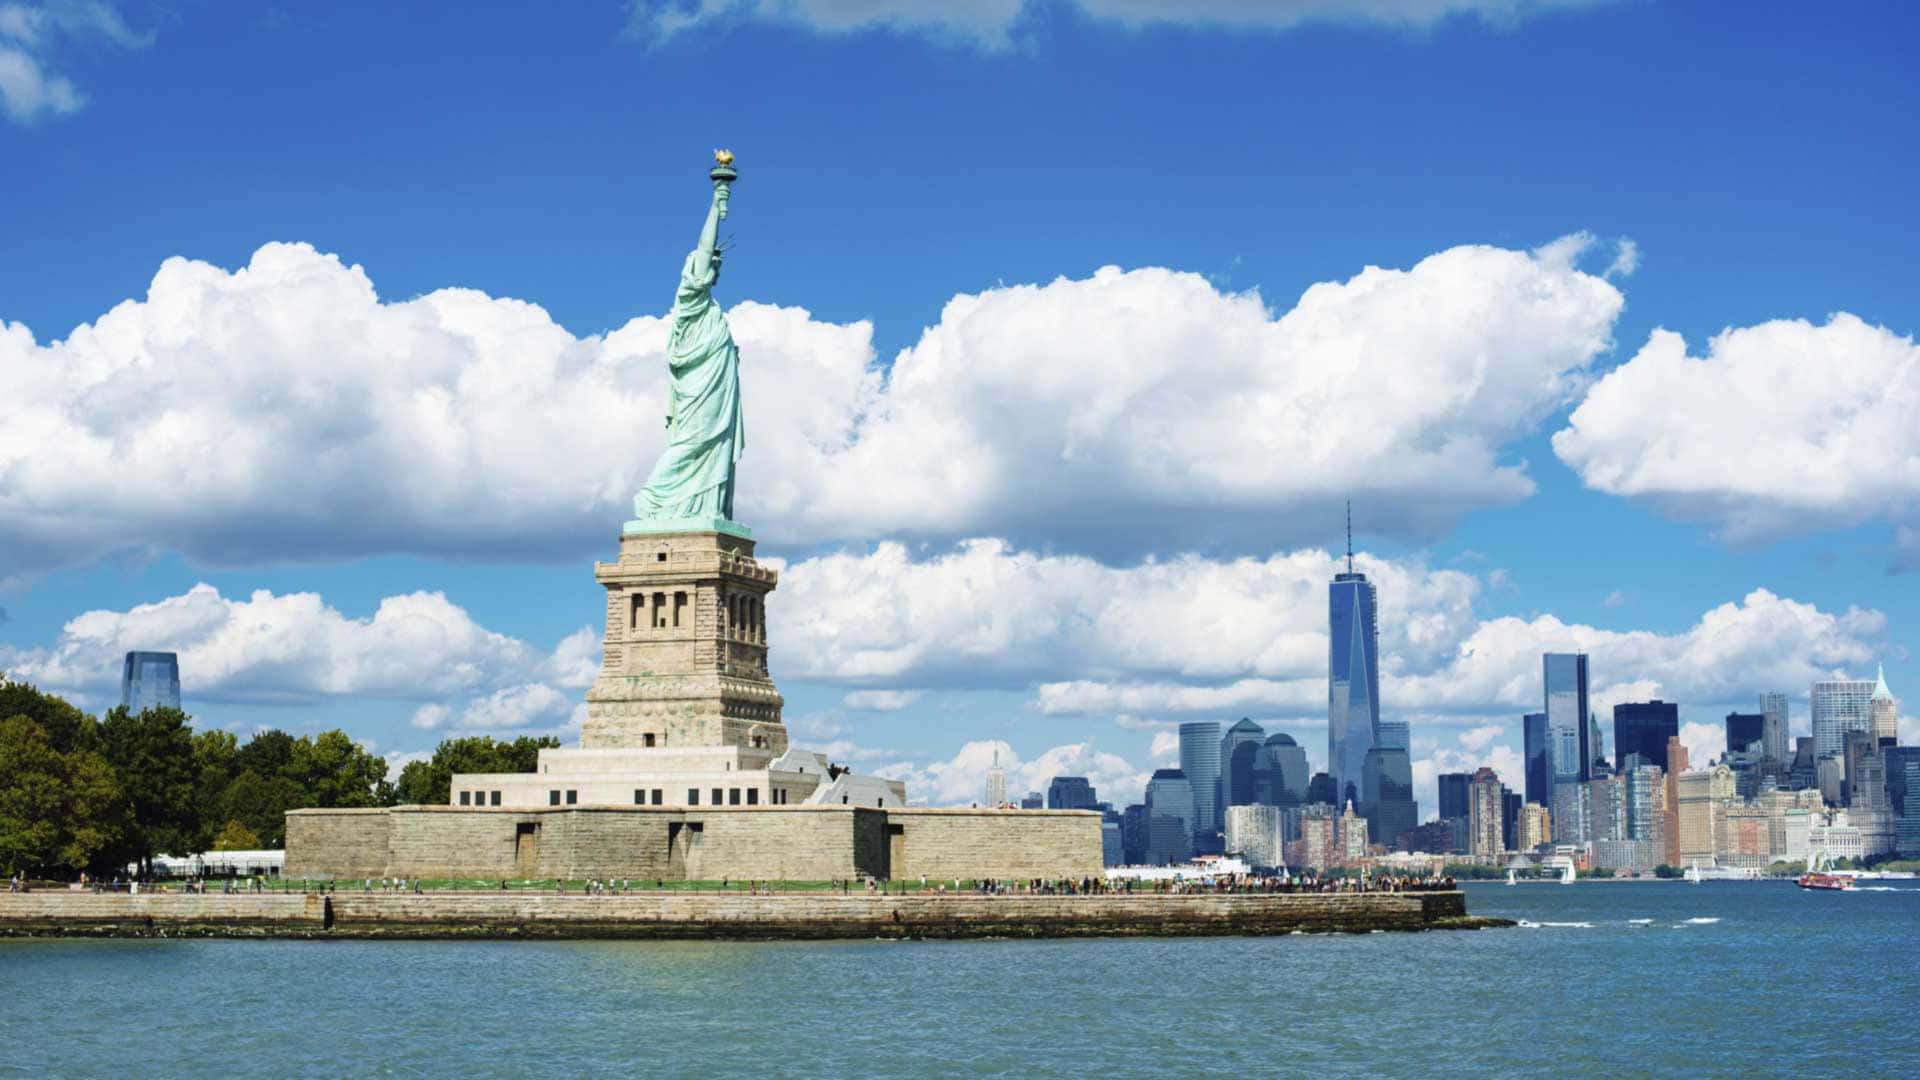 America's iconic Statue of Liberty